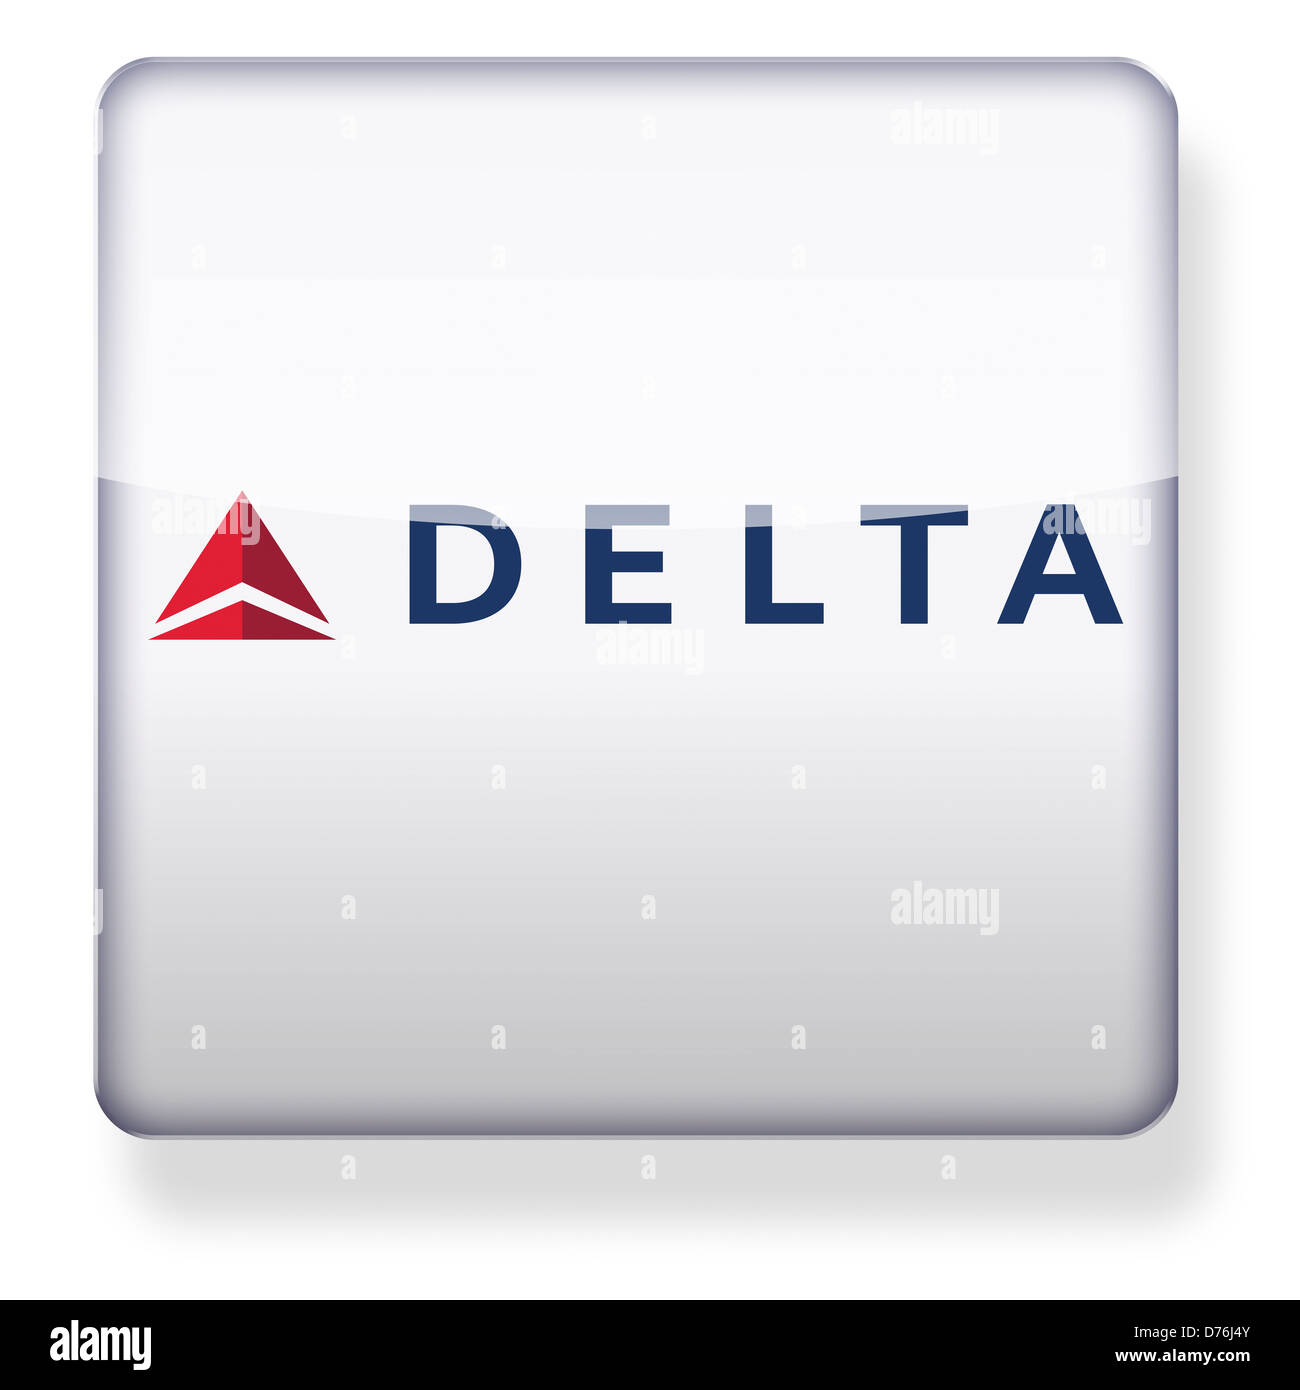 delta airlines logo history